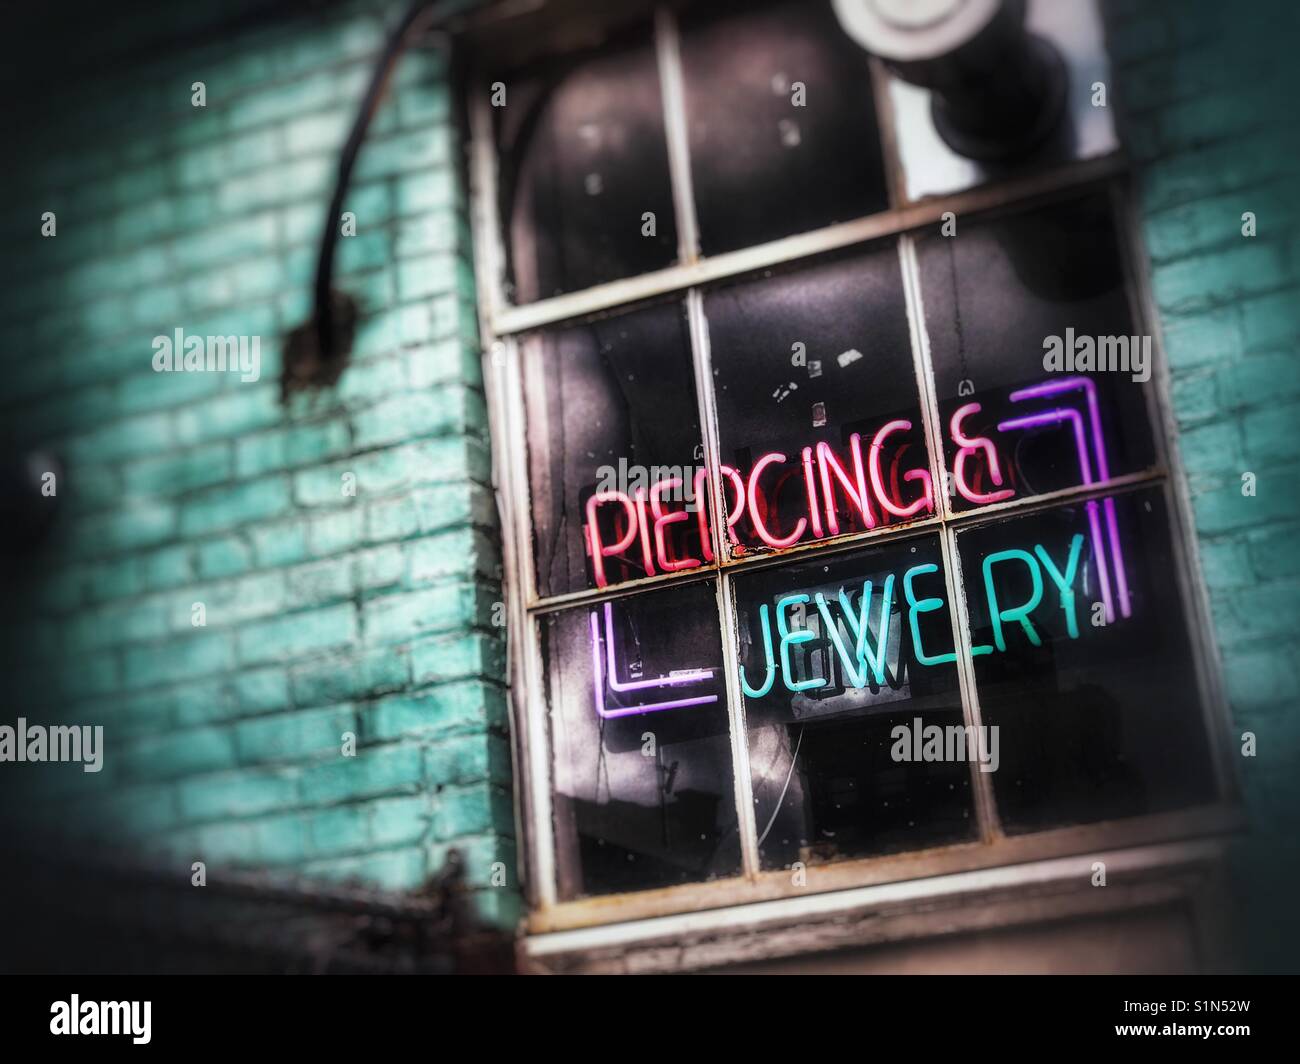 Body piercing establishment window Stock Photo